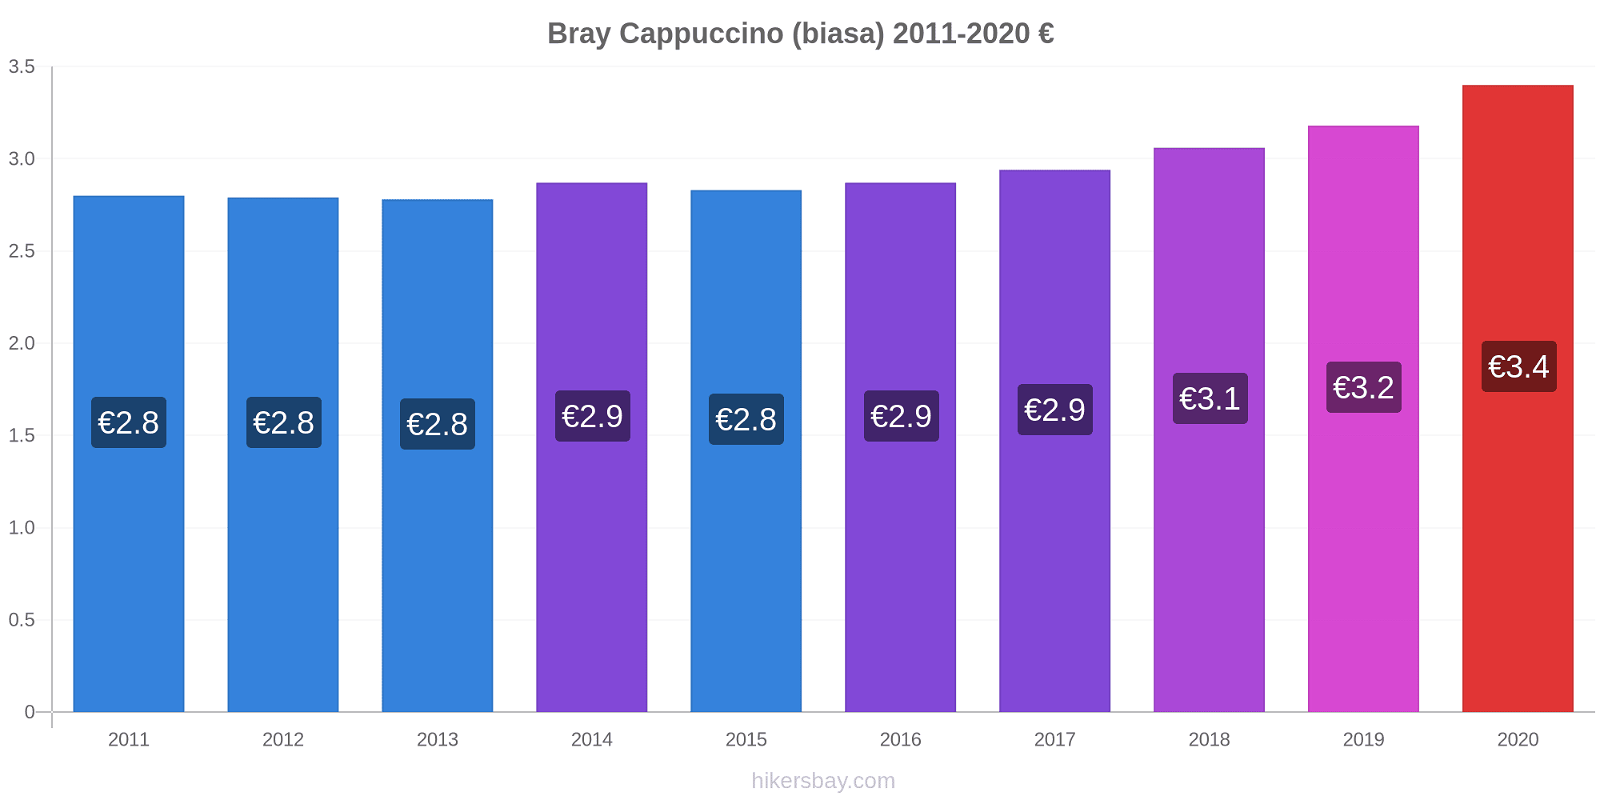 Bray perubahan harga Cappuccino (biasa) hikersbay.com